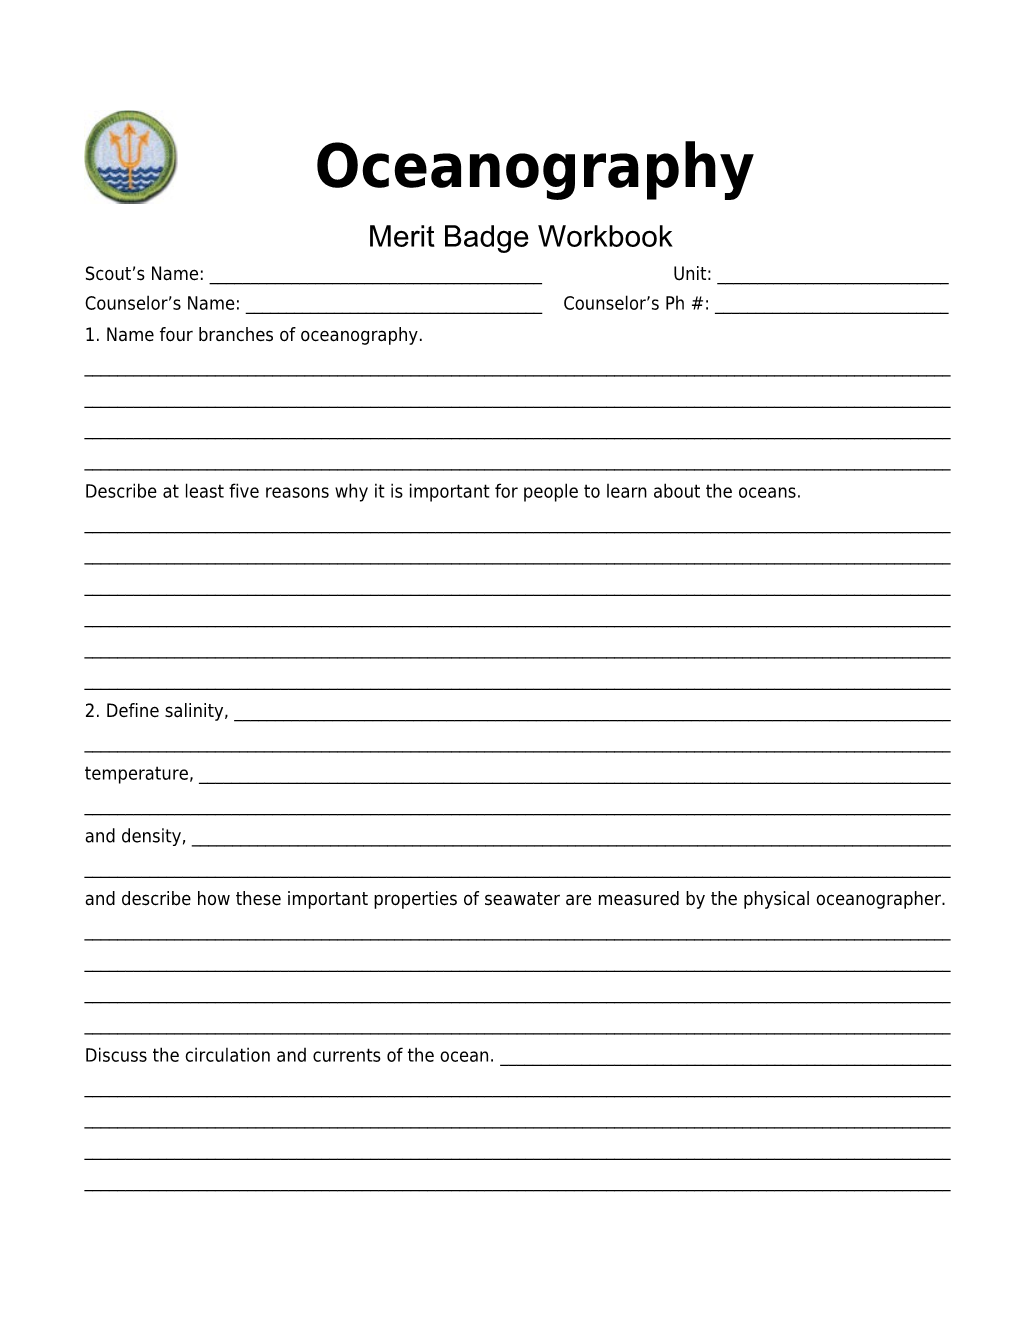 Oceanography P. 6 Merit Badge Workbook Scout's Name: ______